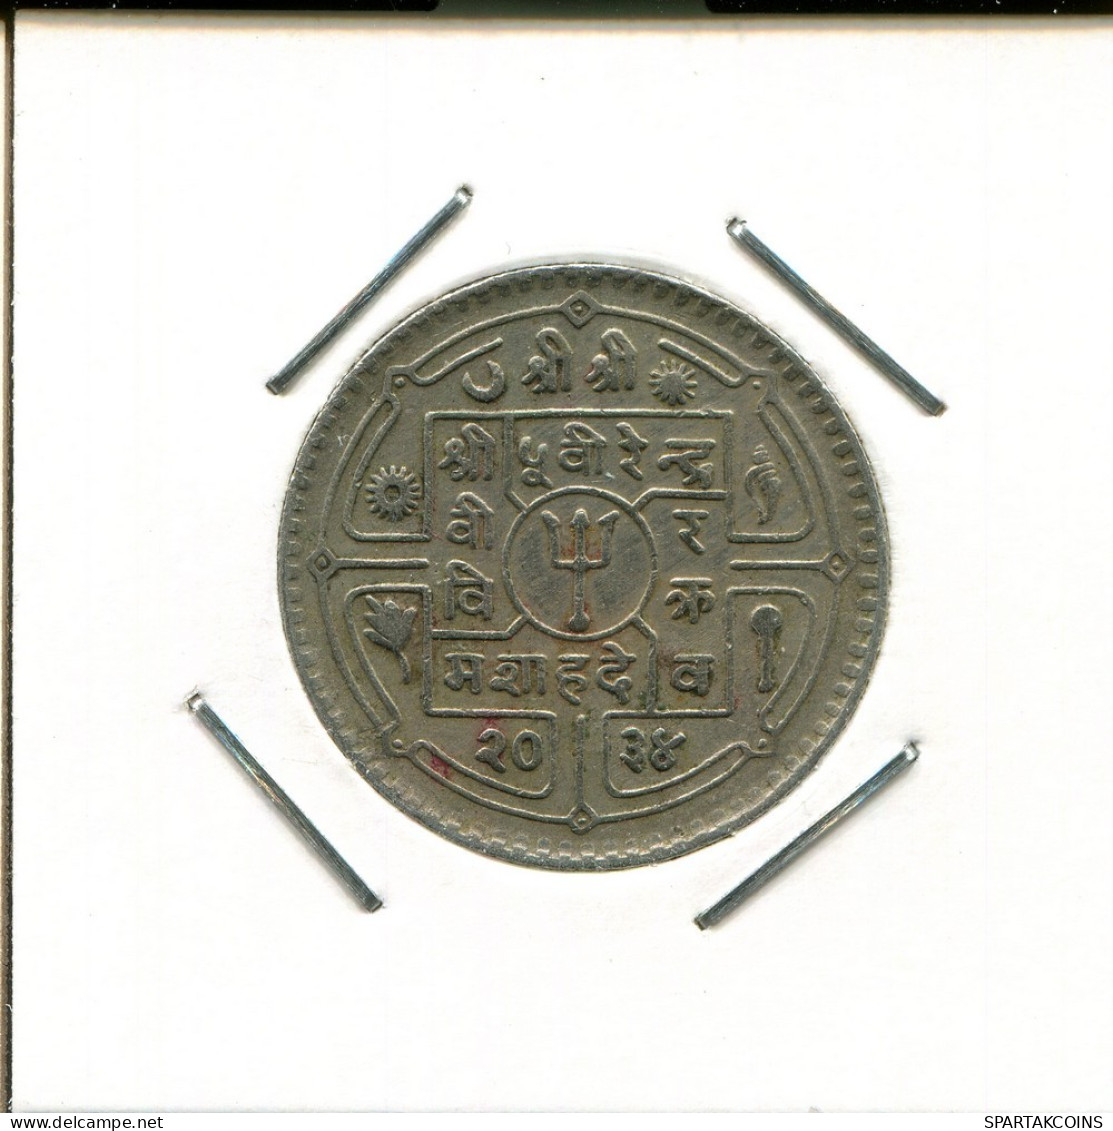 1 RUPEE 1979 NEPAL Coin #AS139.U.A - Népal